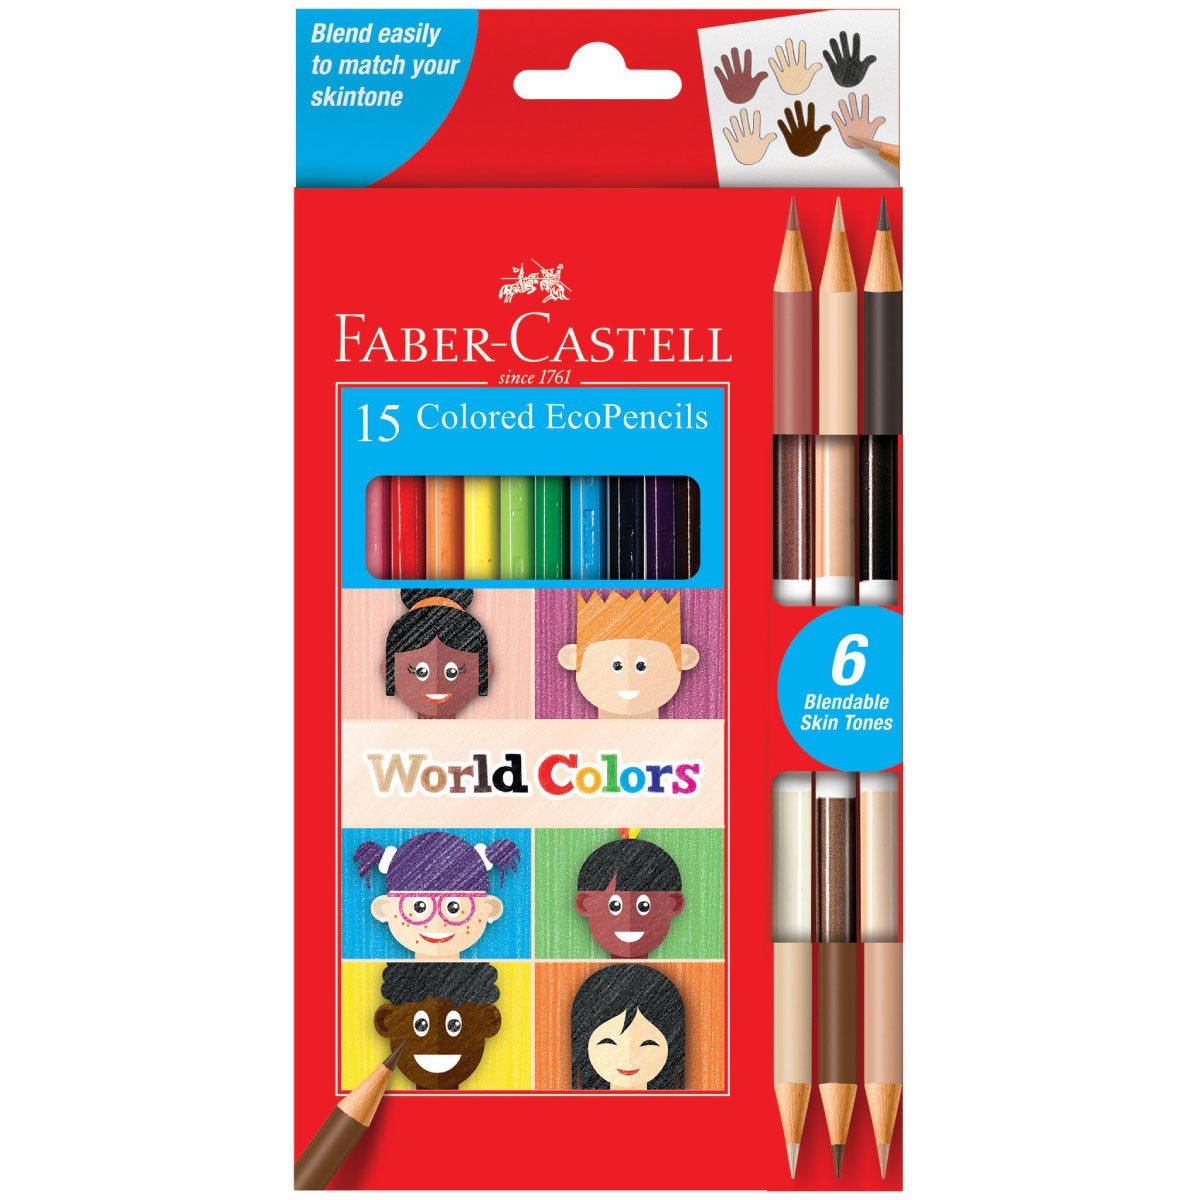 Faber-Castell World Colors EcoPencils Colored Pencils 15 ct